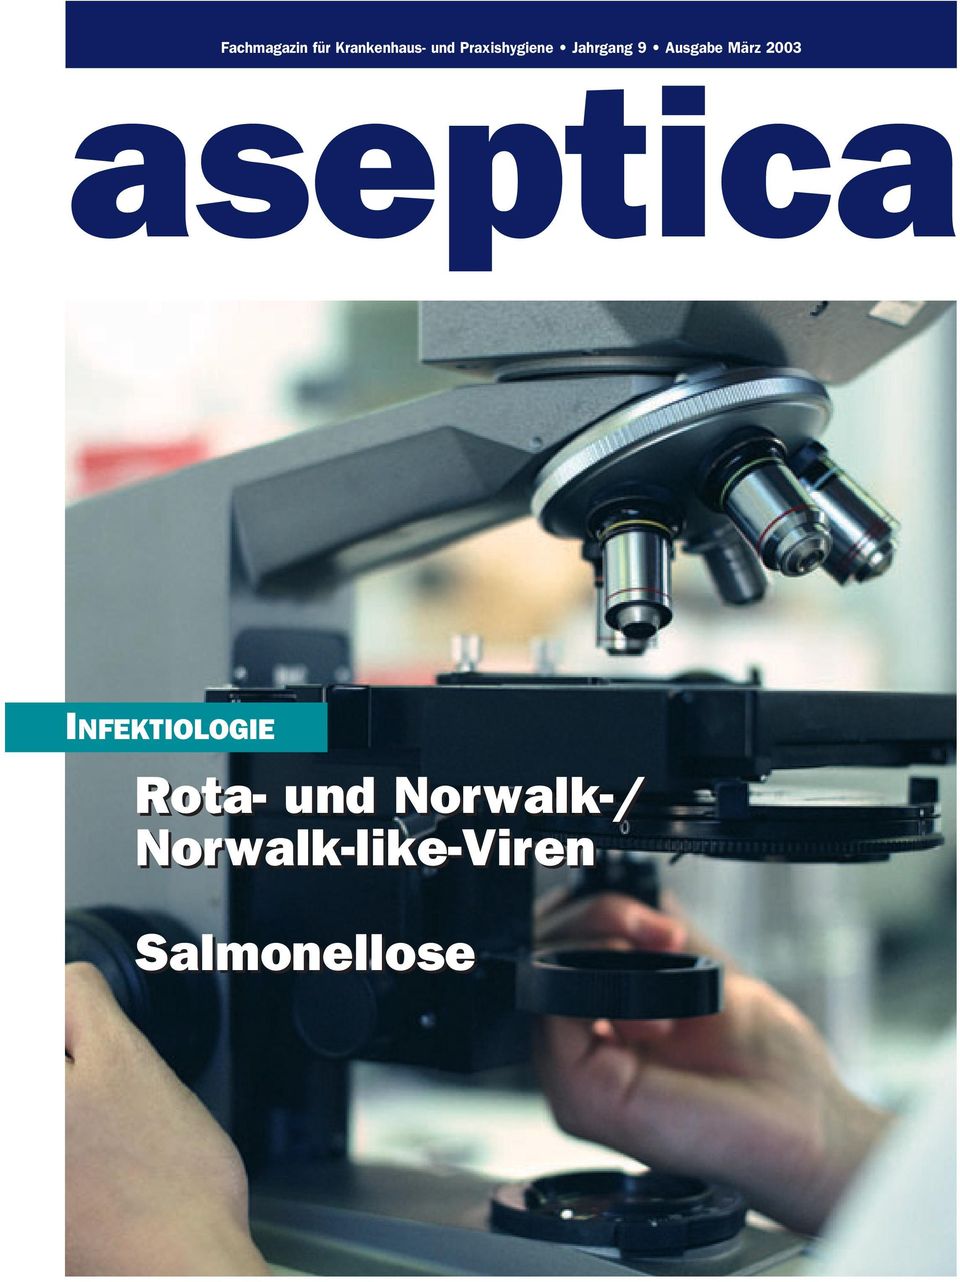 2003 aseptica INFEKTIOLOGIE Rota- und